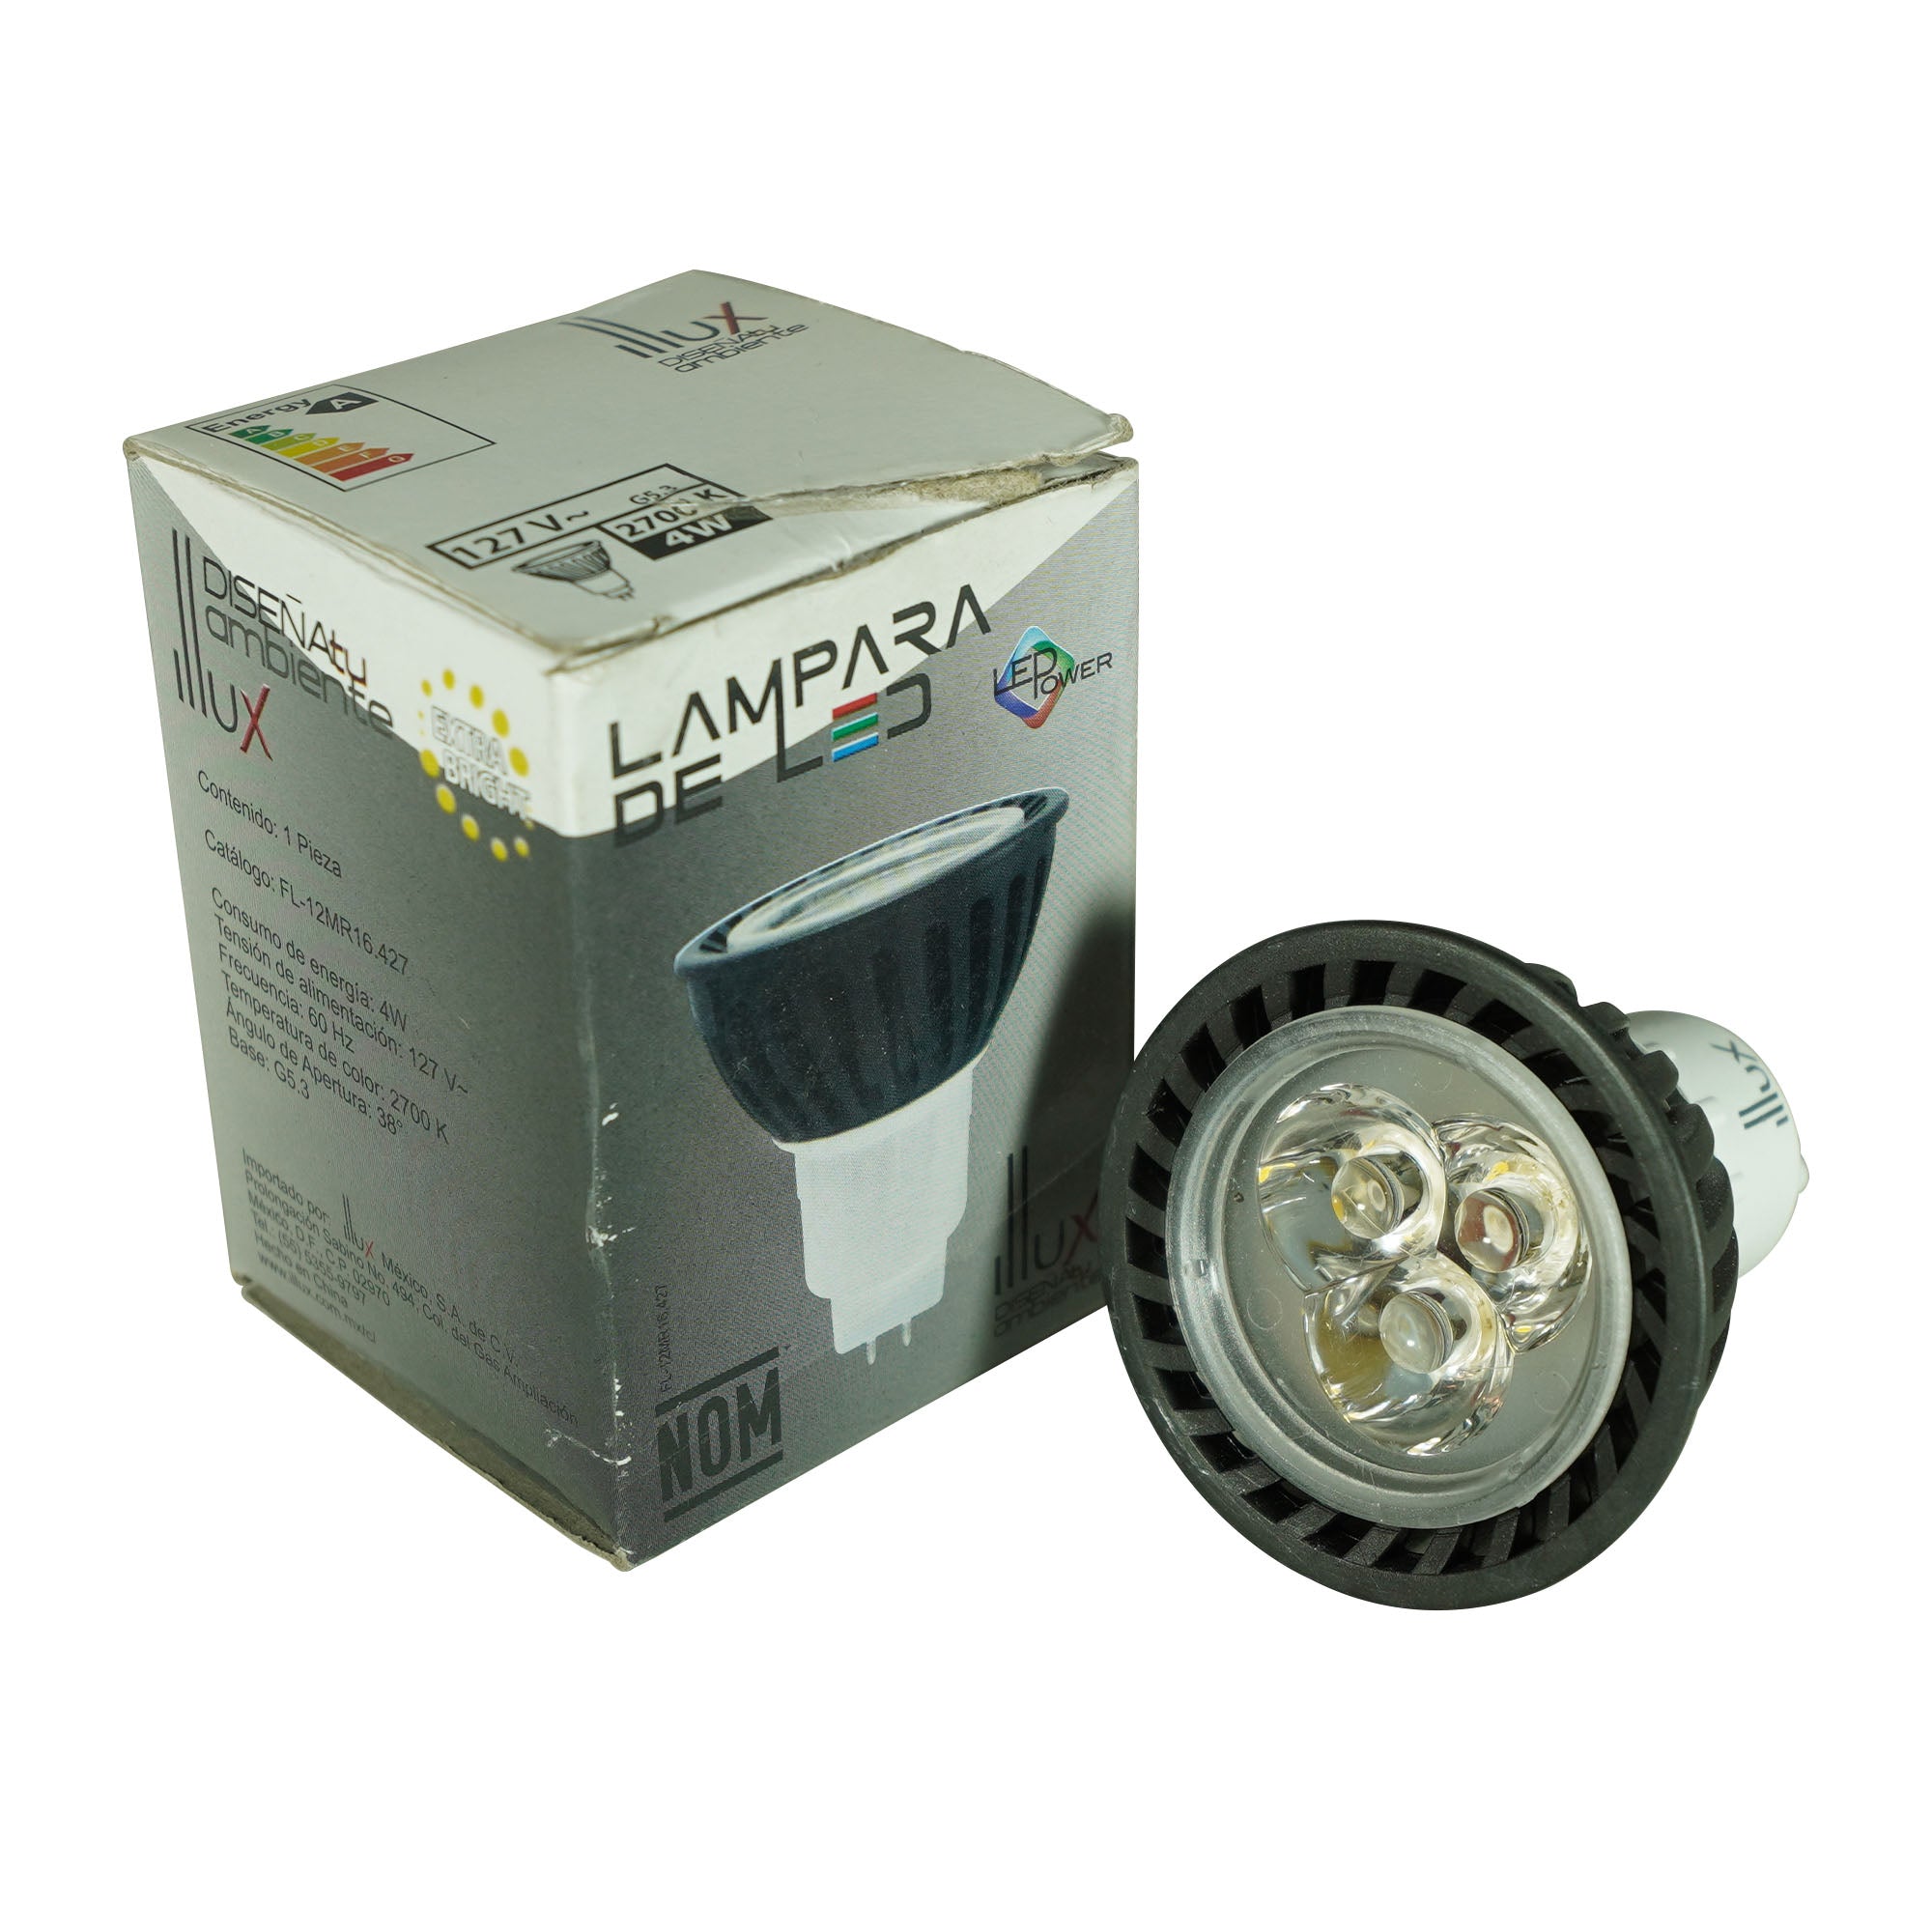 Lámpara LED MR16, FL-12MR16.427